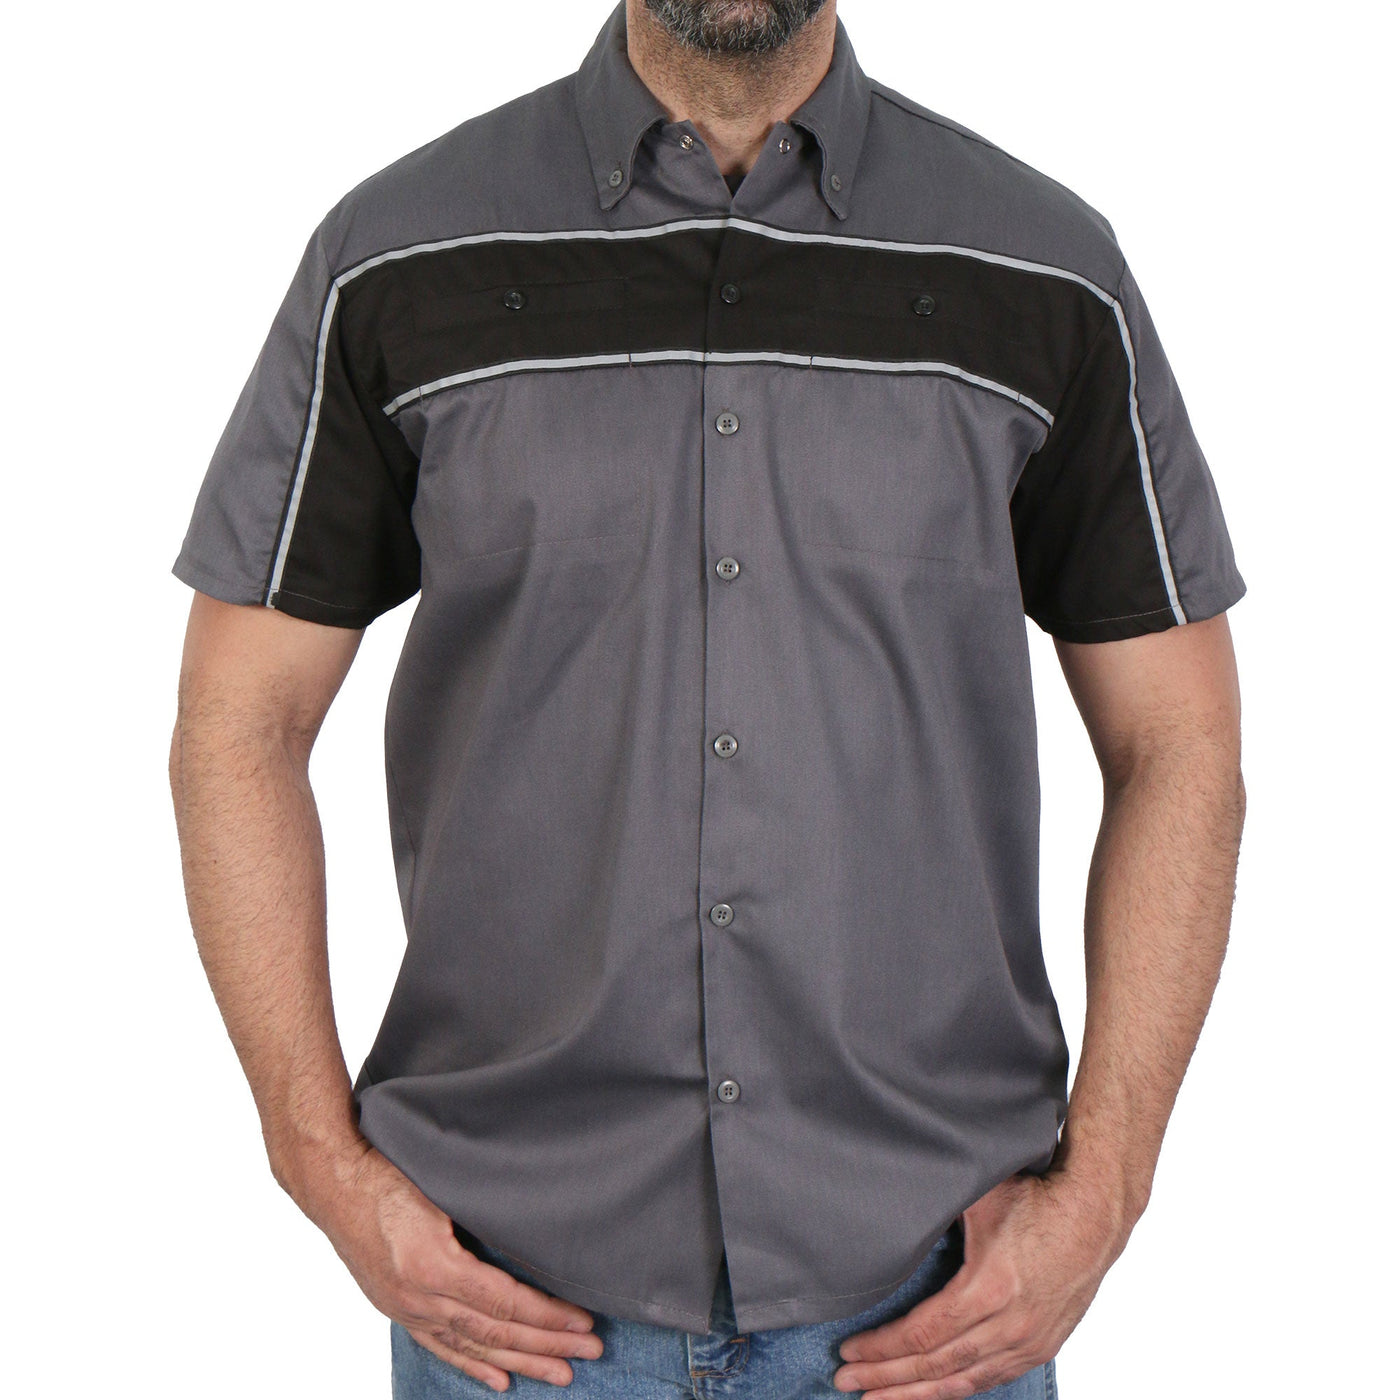 Hot Leathers 2-Tone Stripe Shirt GMM1005